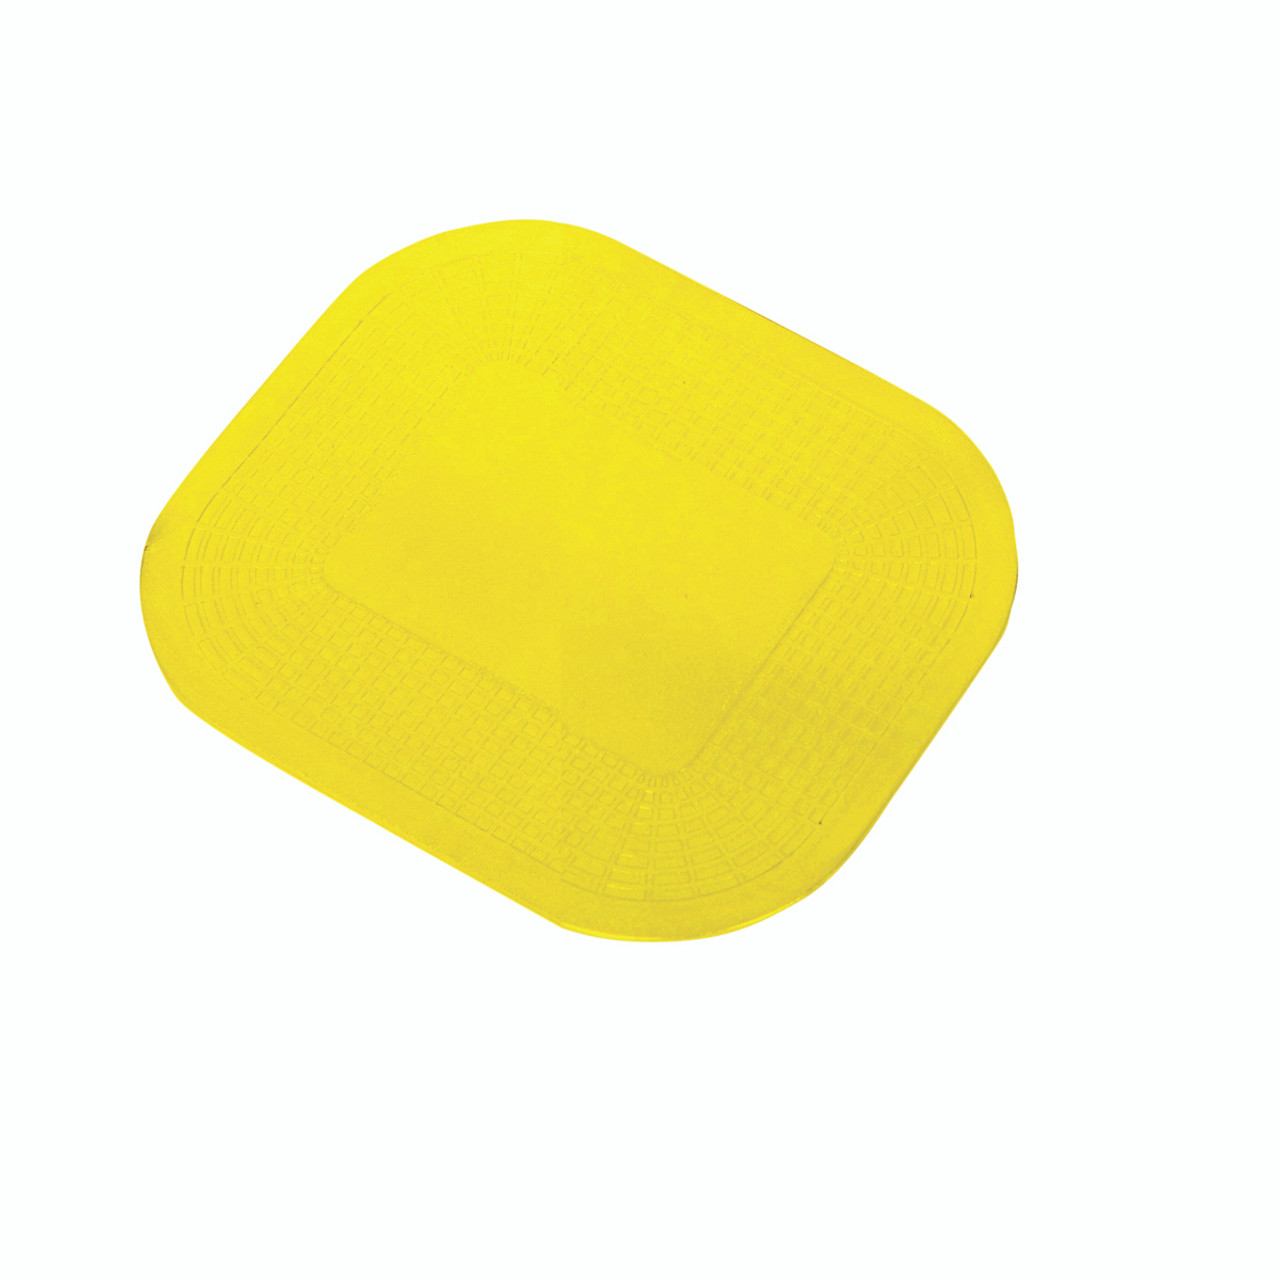 Dycem¨ non-slip rectangular pad, 7-1/4"x10", yellow